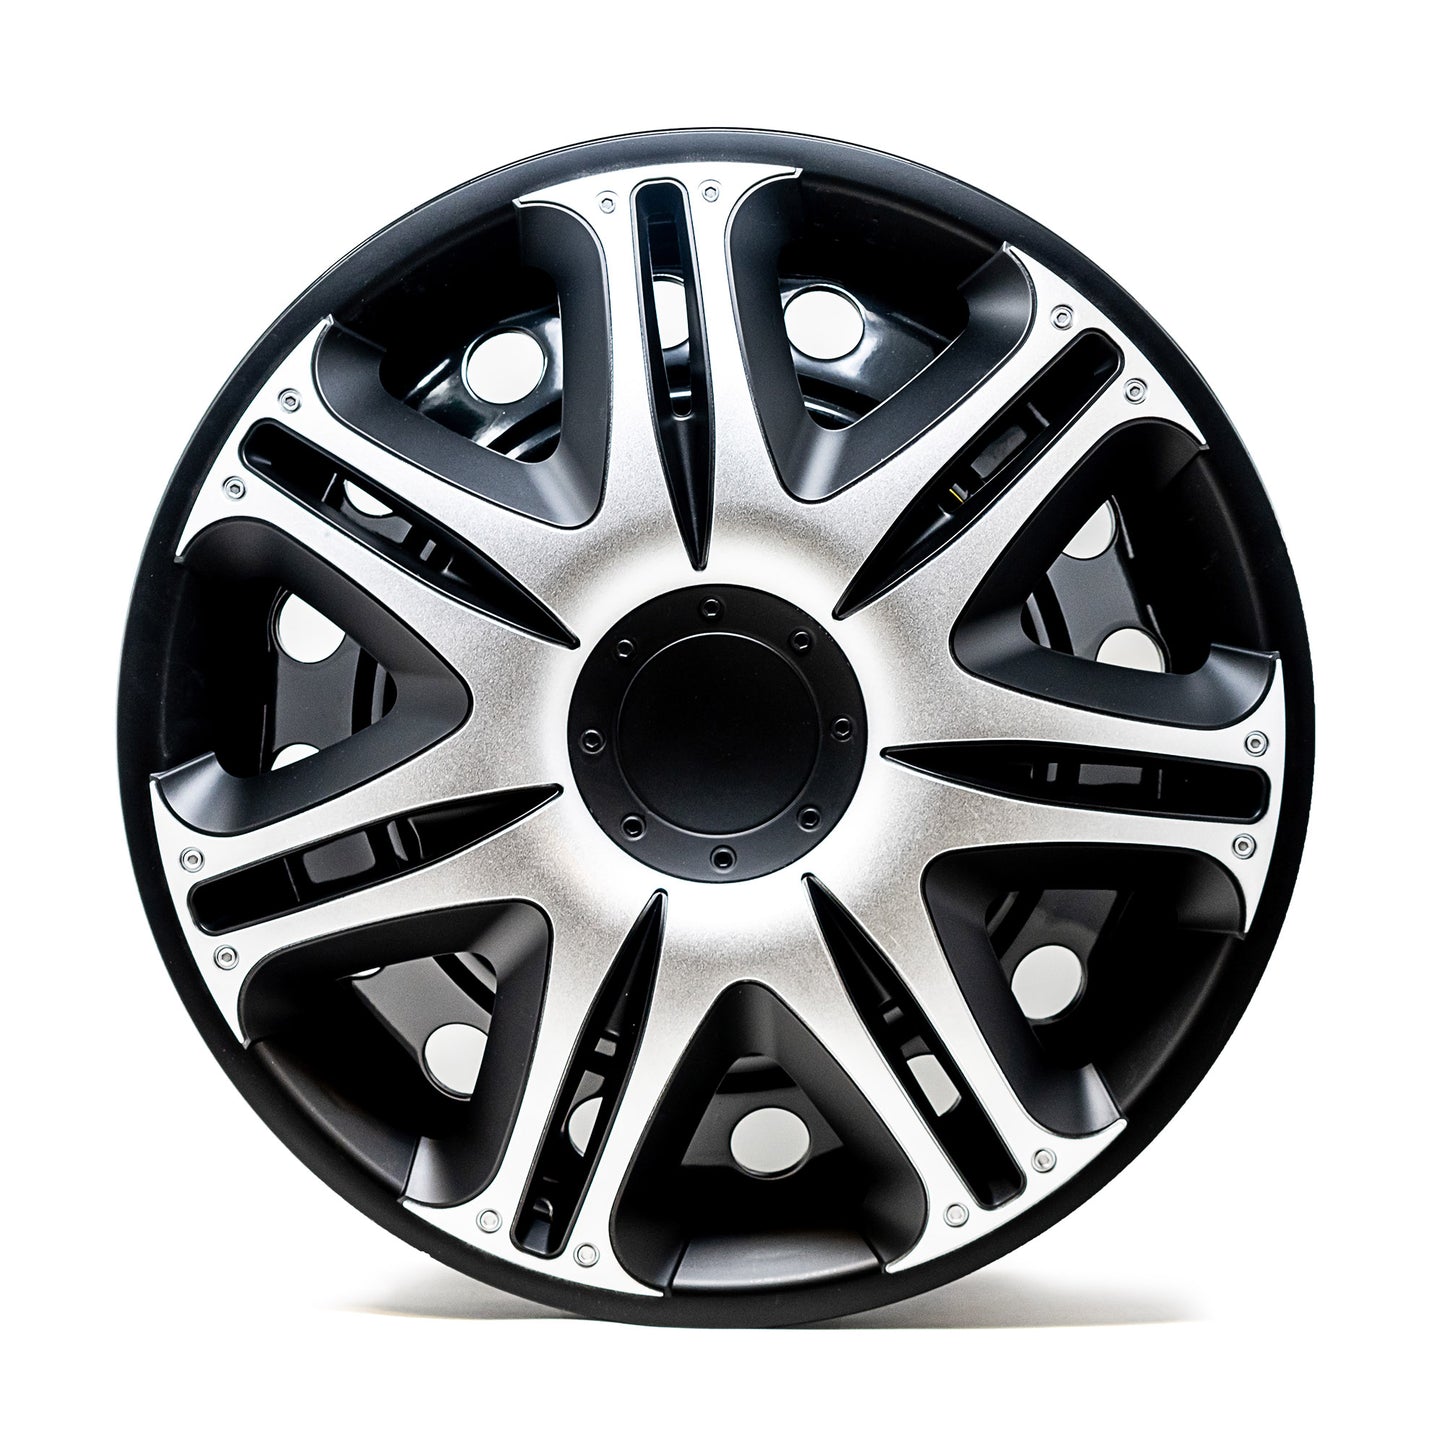 Velociti Wheel Cover Kit - Silver & Black (4 Pack)